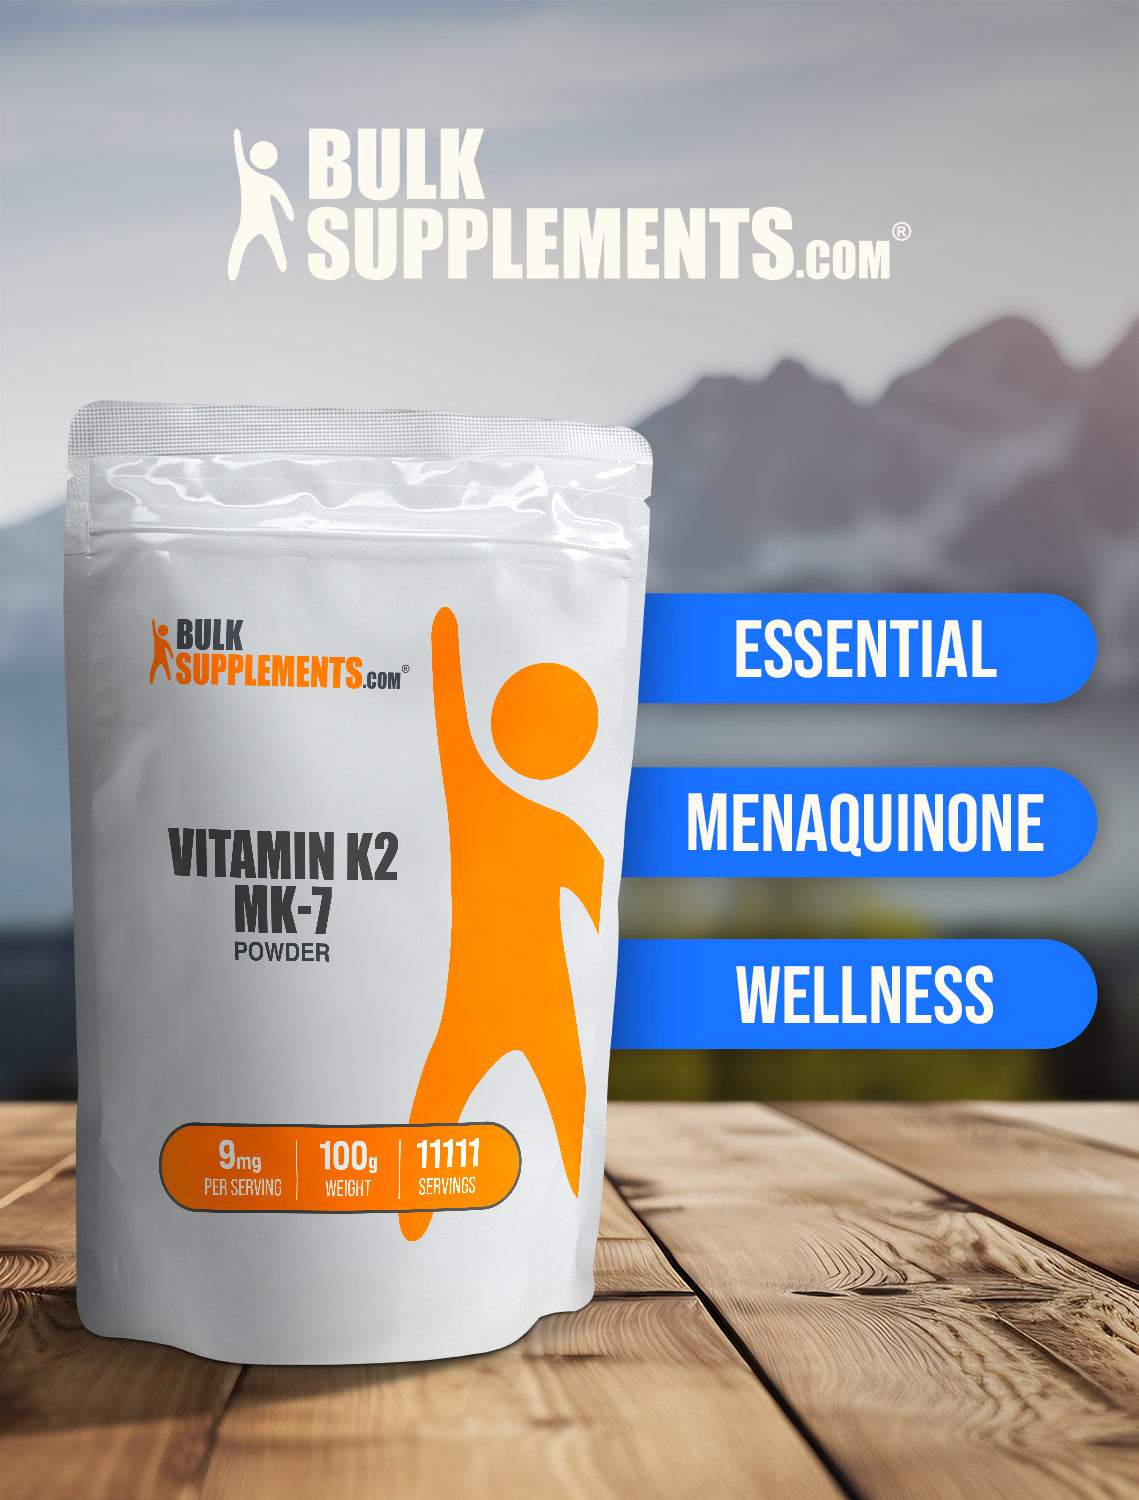 Vitamin K2 MK-7 powder keyword image 100g